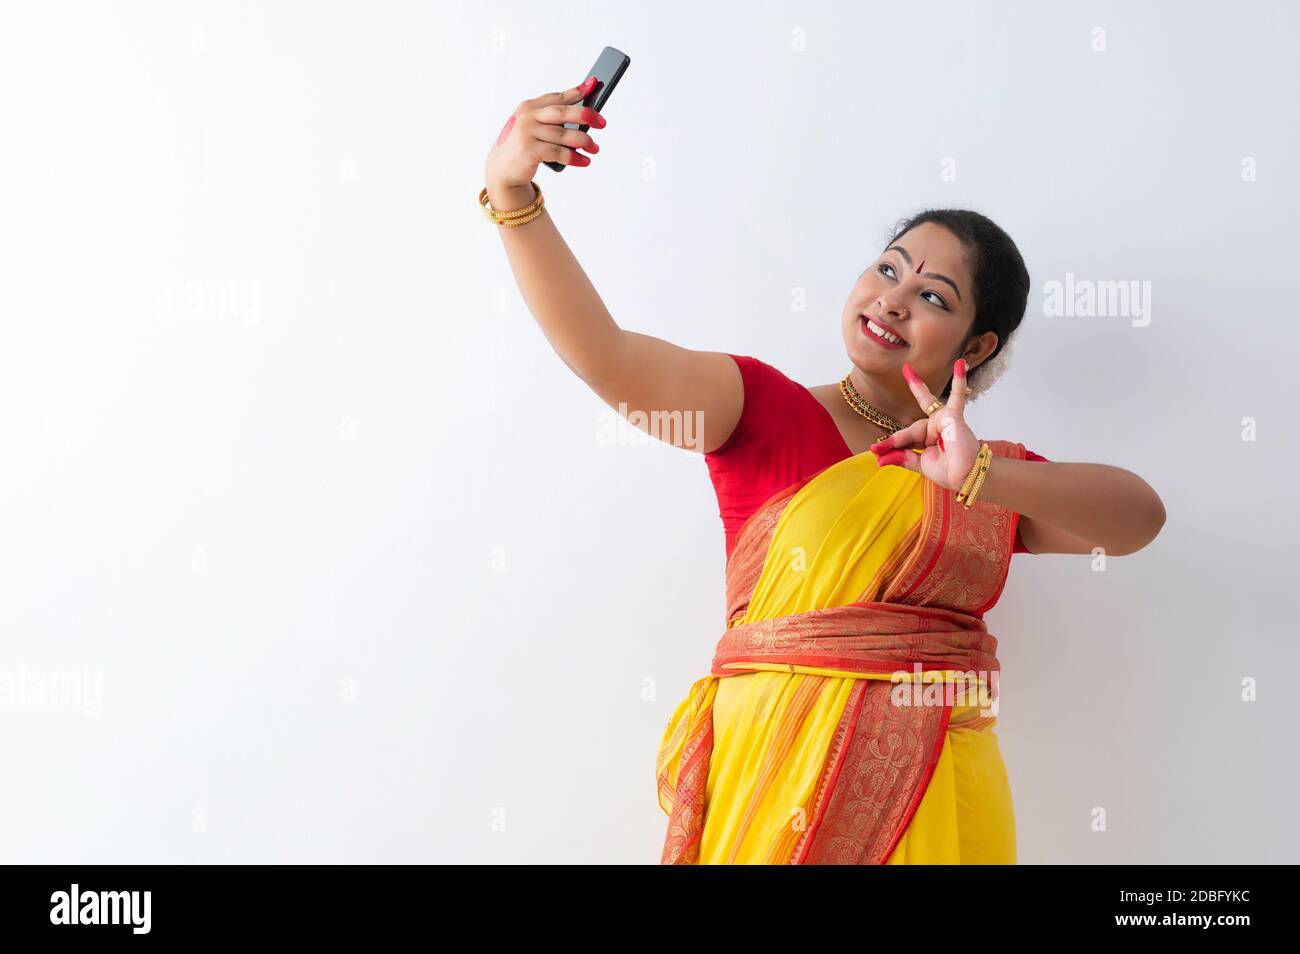 Kuchipudi dancer clicking a selfie on her phone while doing Kataka mukha mudra Stock Photo